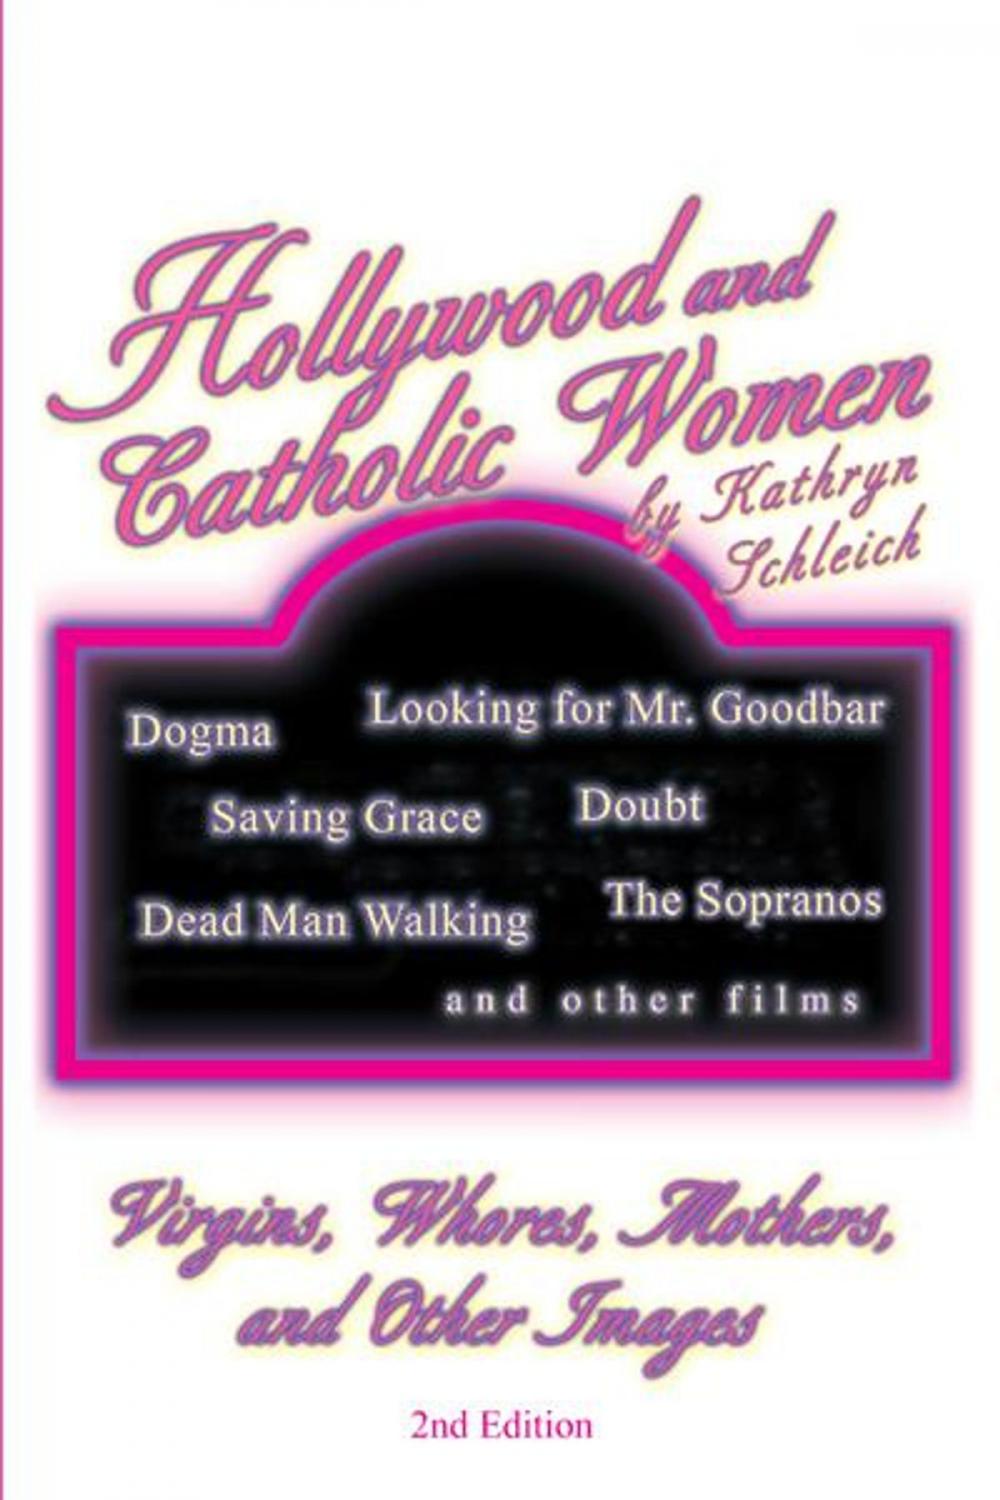 Big bigCover of Hollywood and Catholic Women